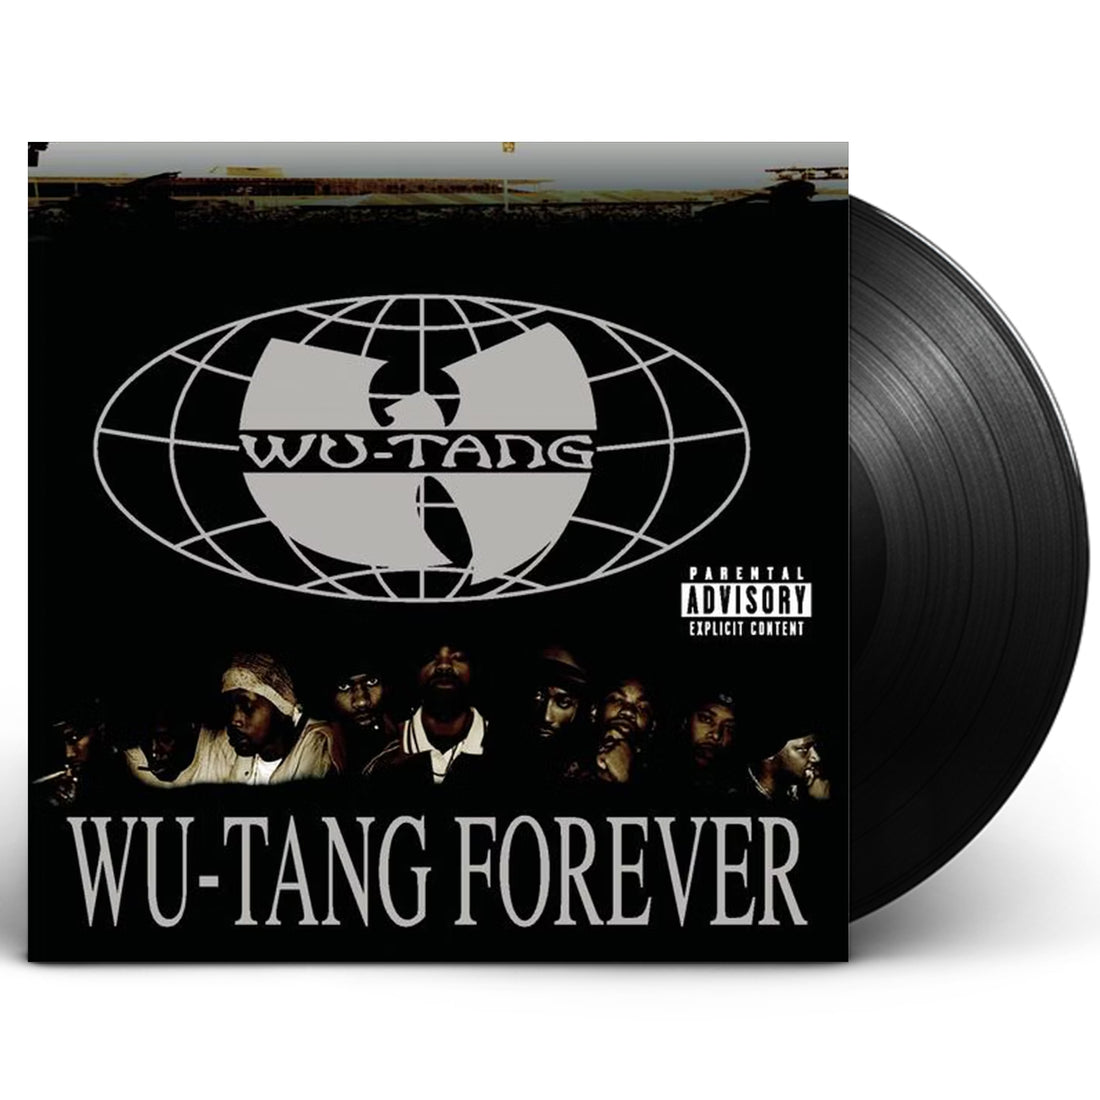 Wu-Tang Clan "Wu-Tang Forever" 4xLP Vinyl 180g